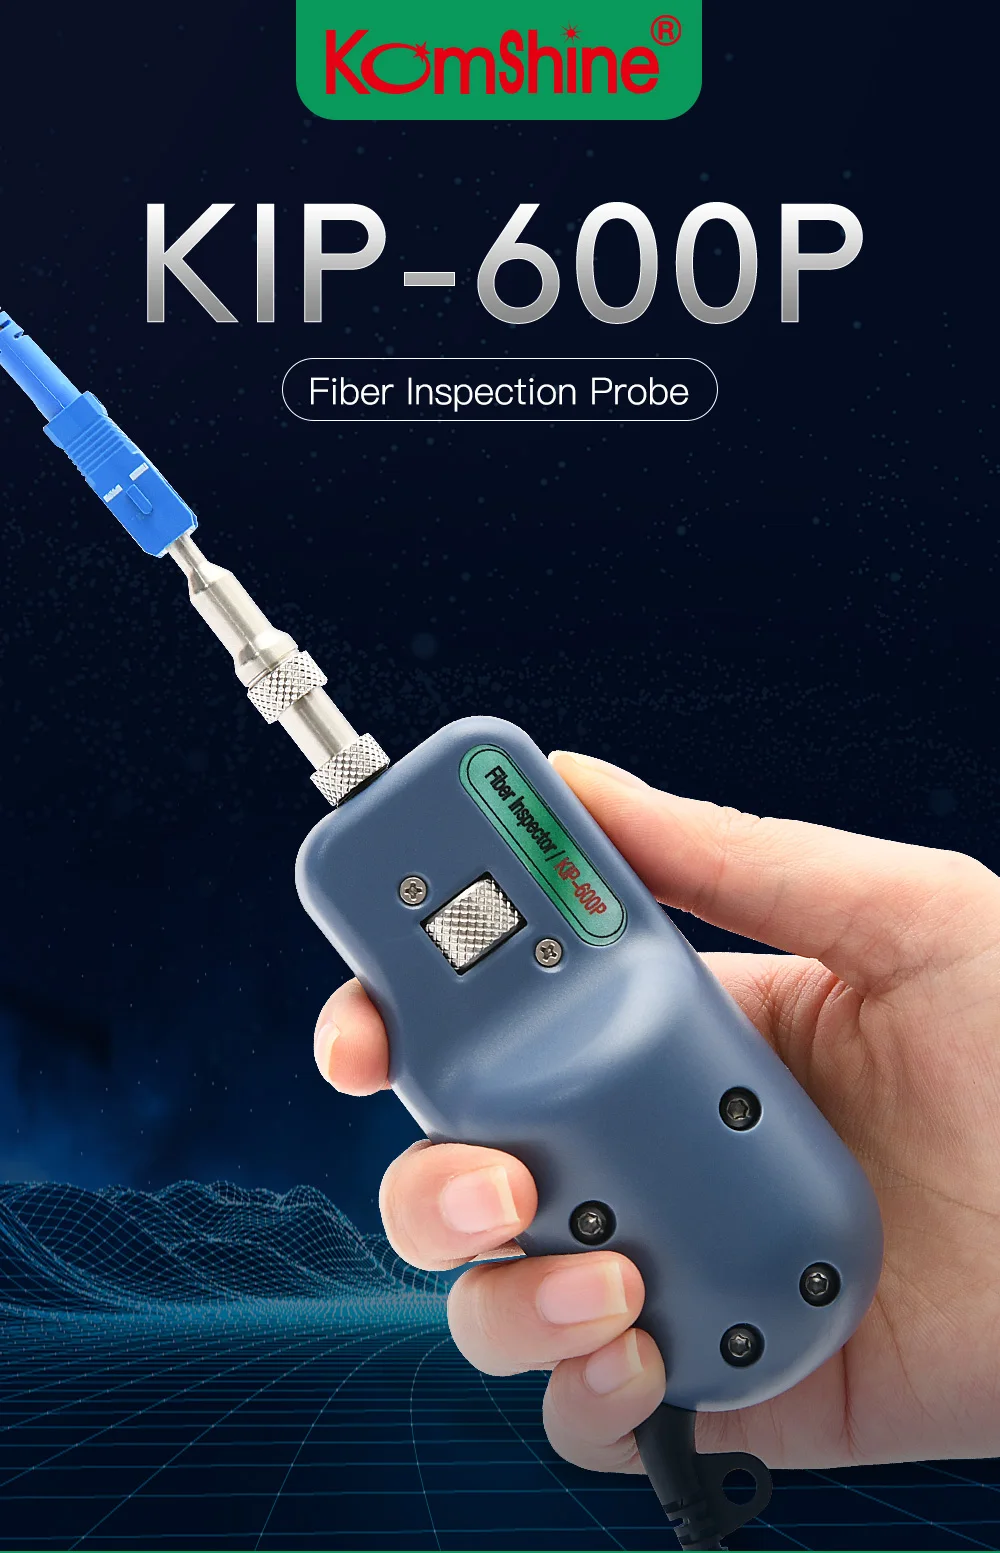 Komshine KIP - 600P fiber Optik muayene Probu 400X büyütme